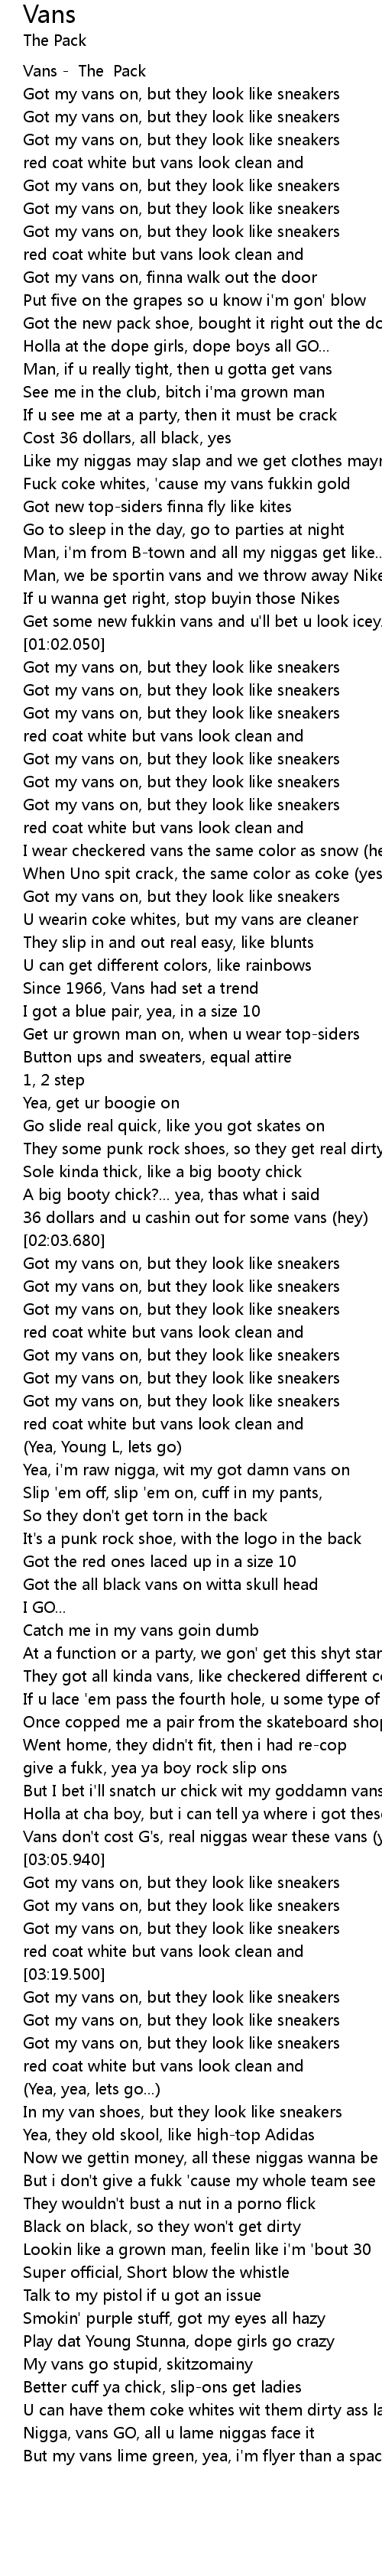 vans on but they look like sneakers lyrics